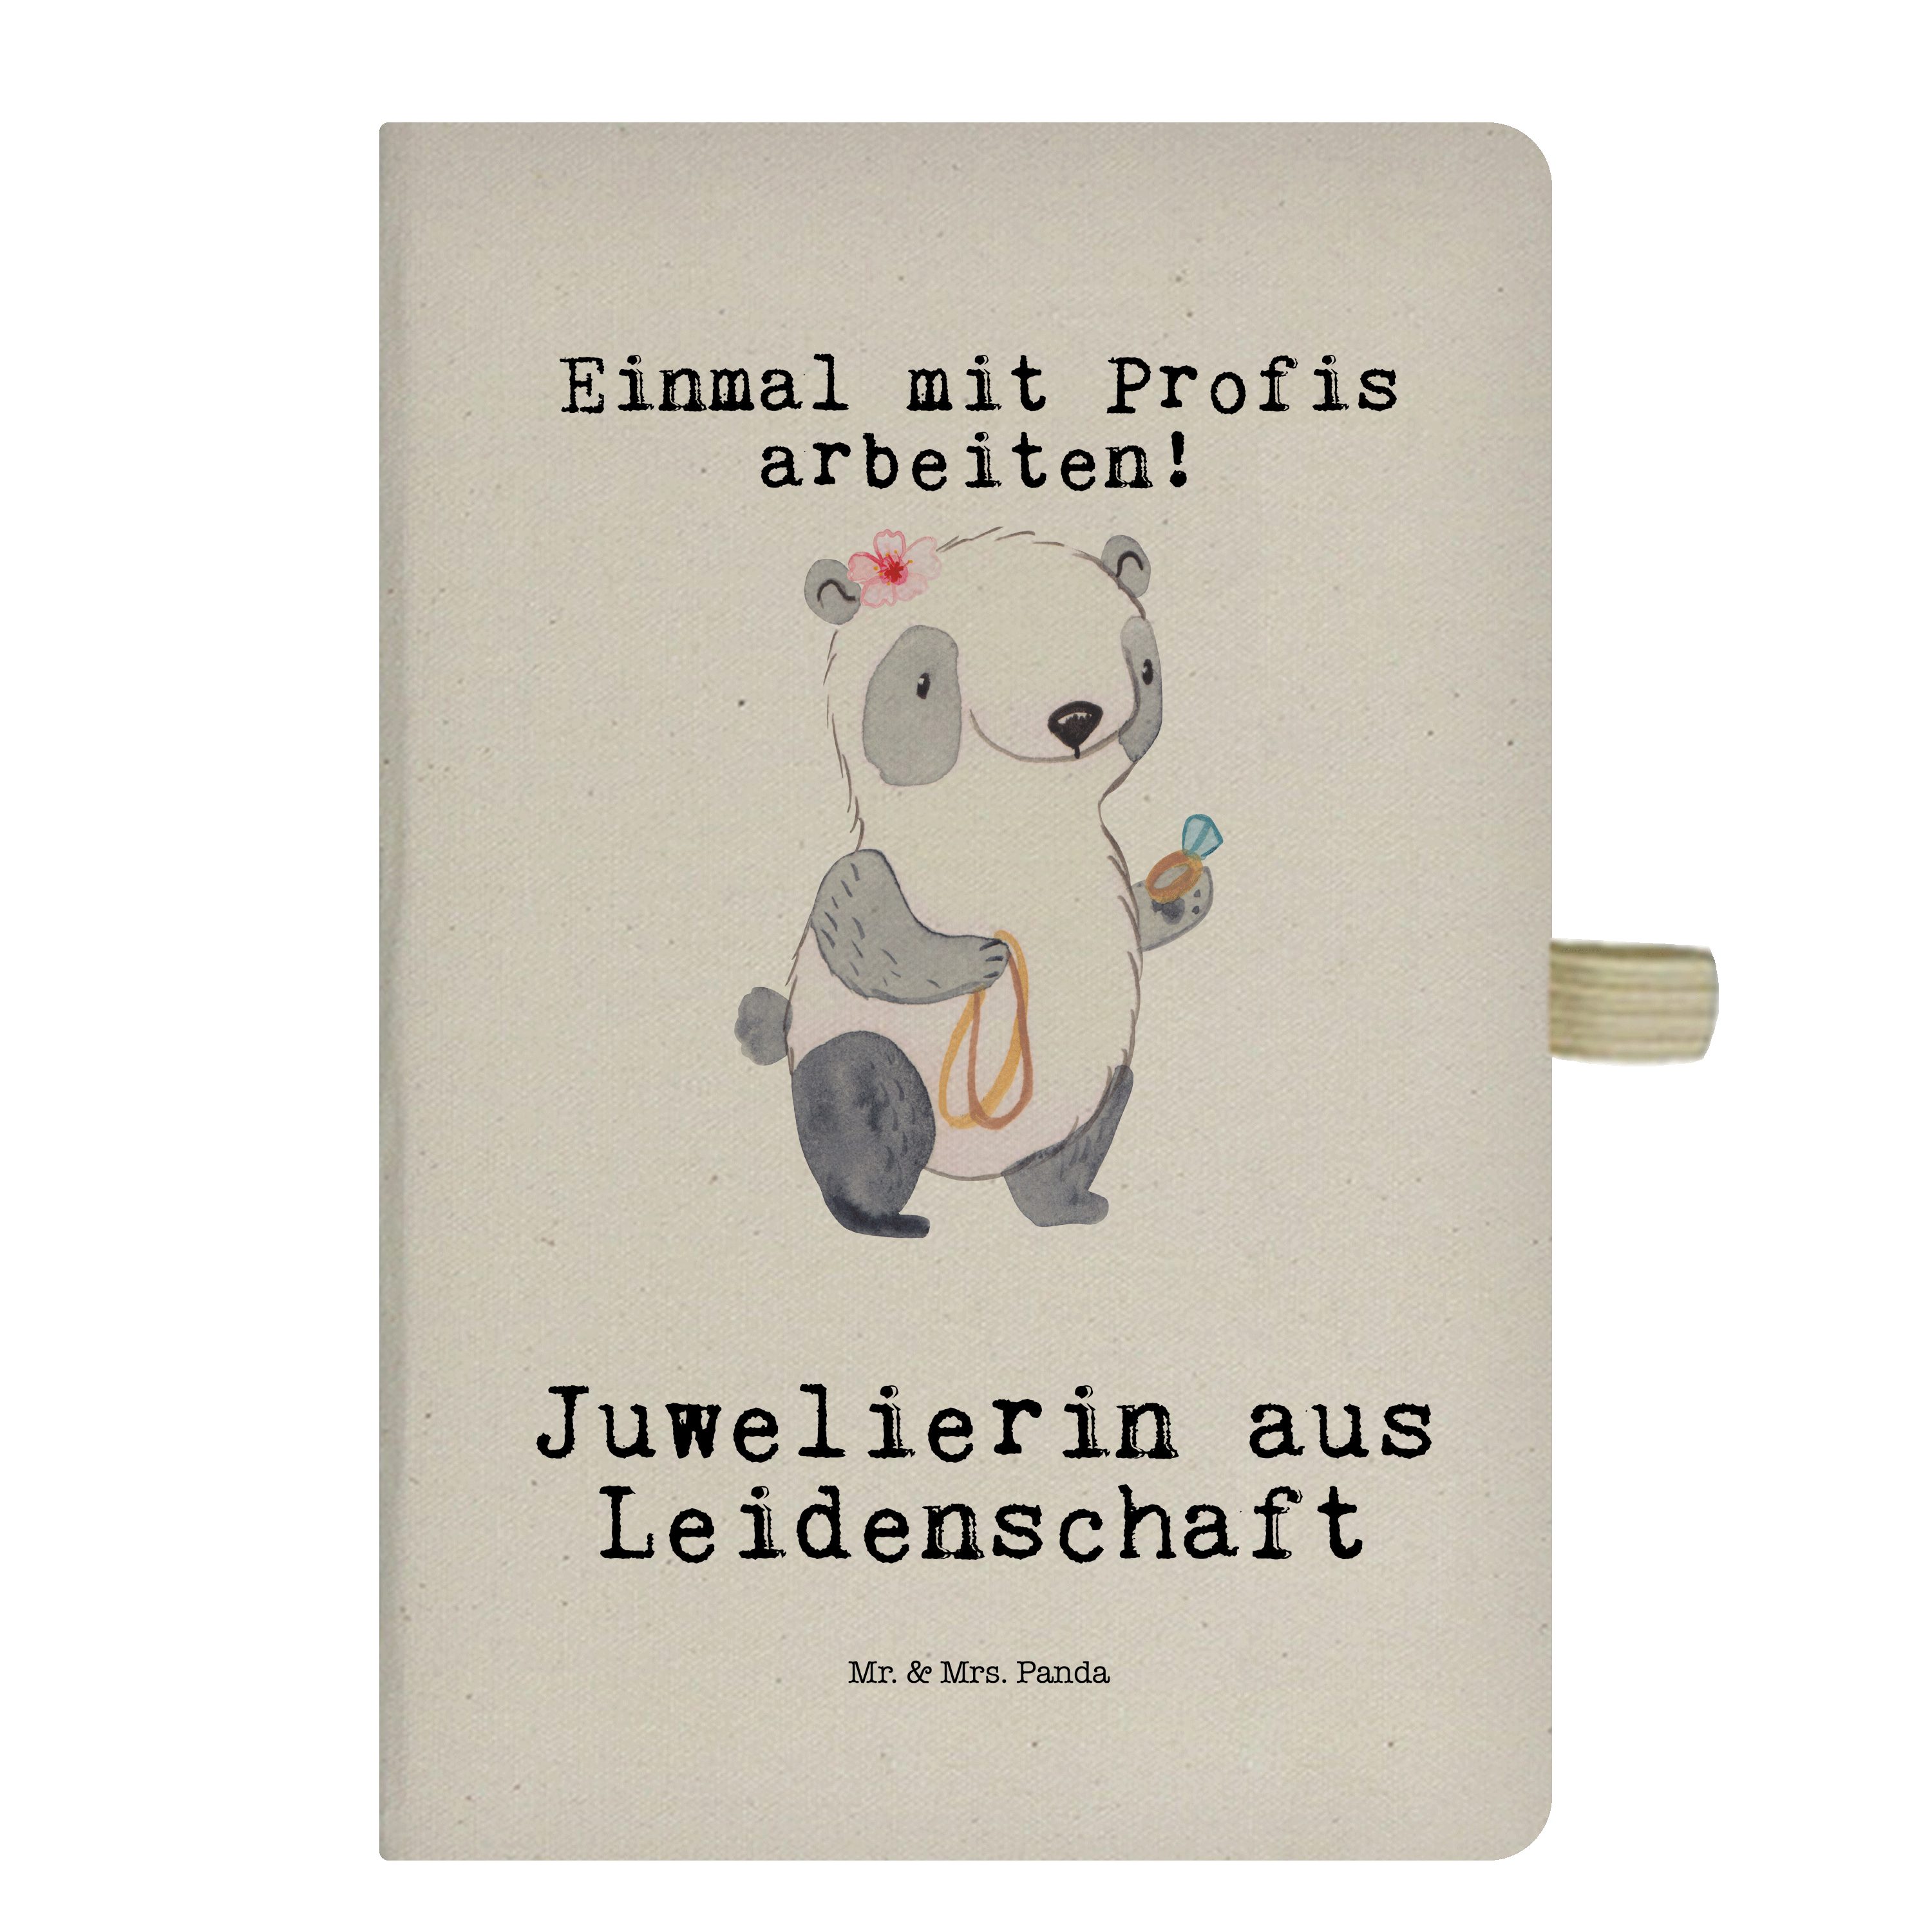 aus & Mrs. Panda Panda Abschied, Mrs. Transparent - & Juwelierin Mr. Geschenk, - Mr. Schen Leidenschaft Notizbuch